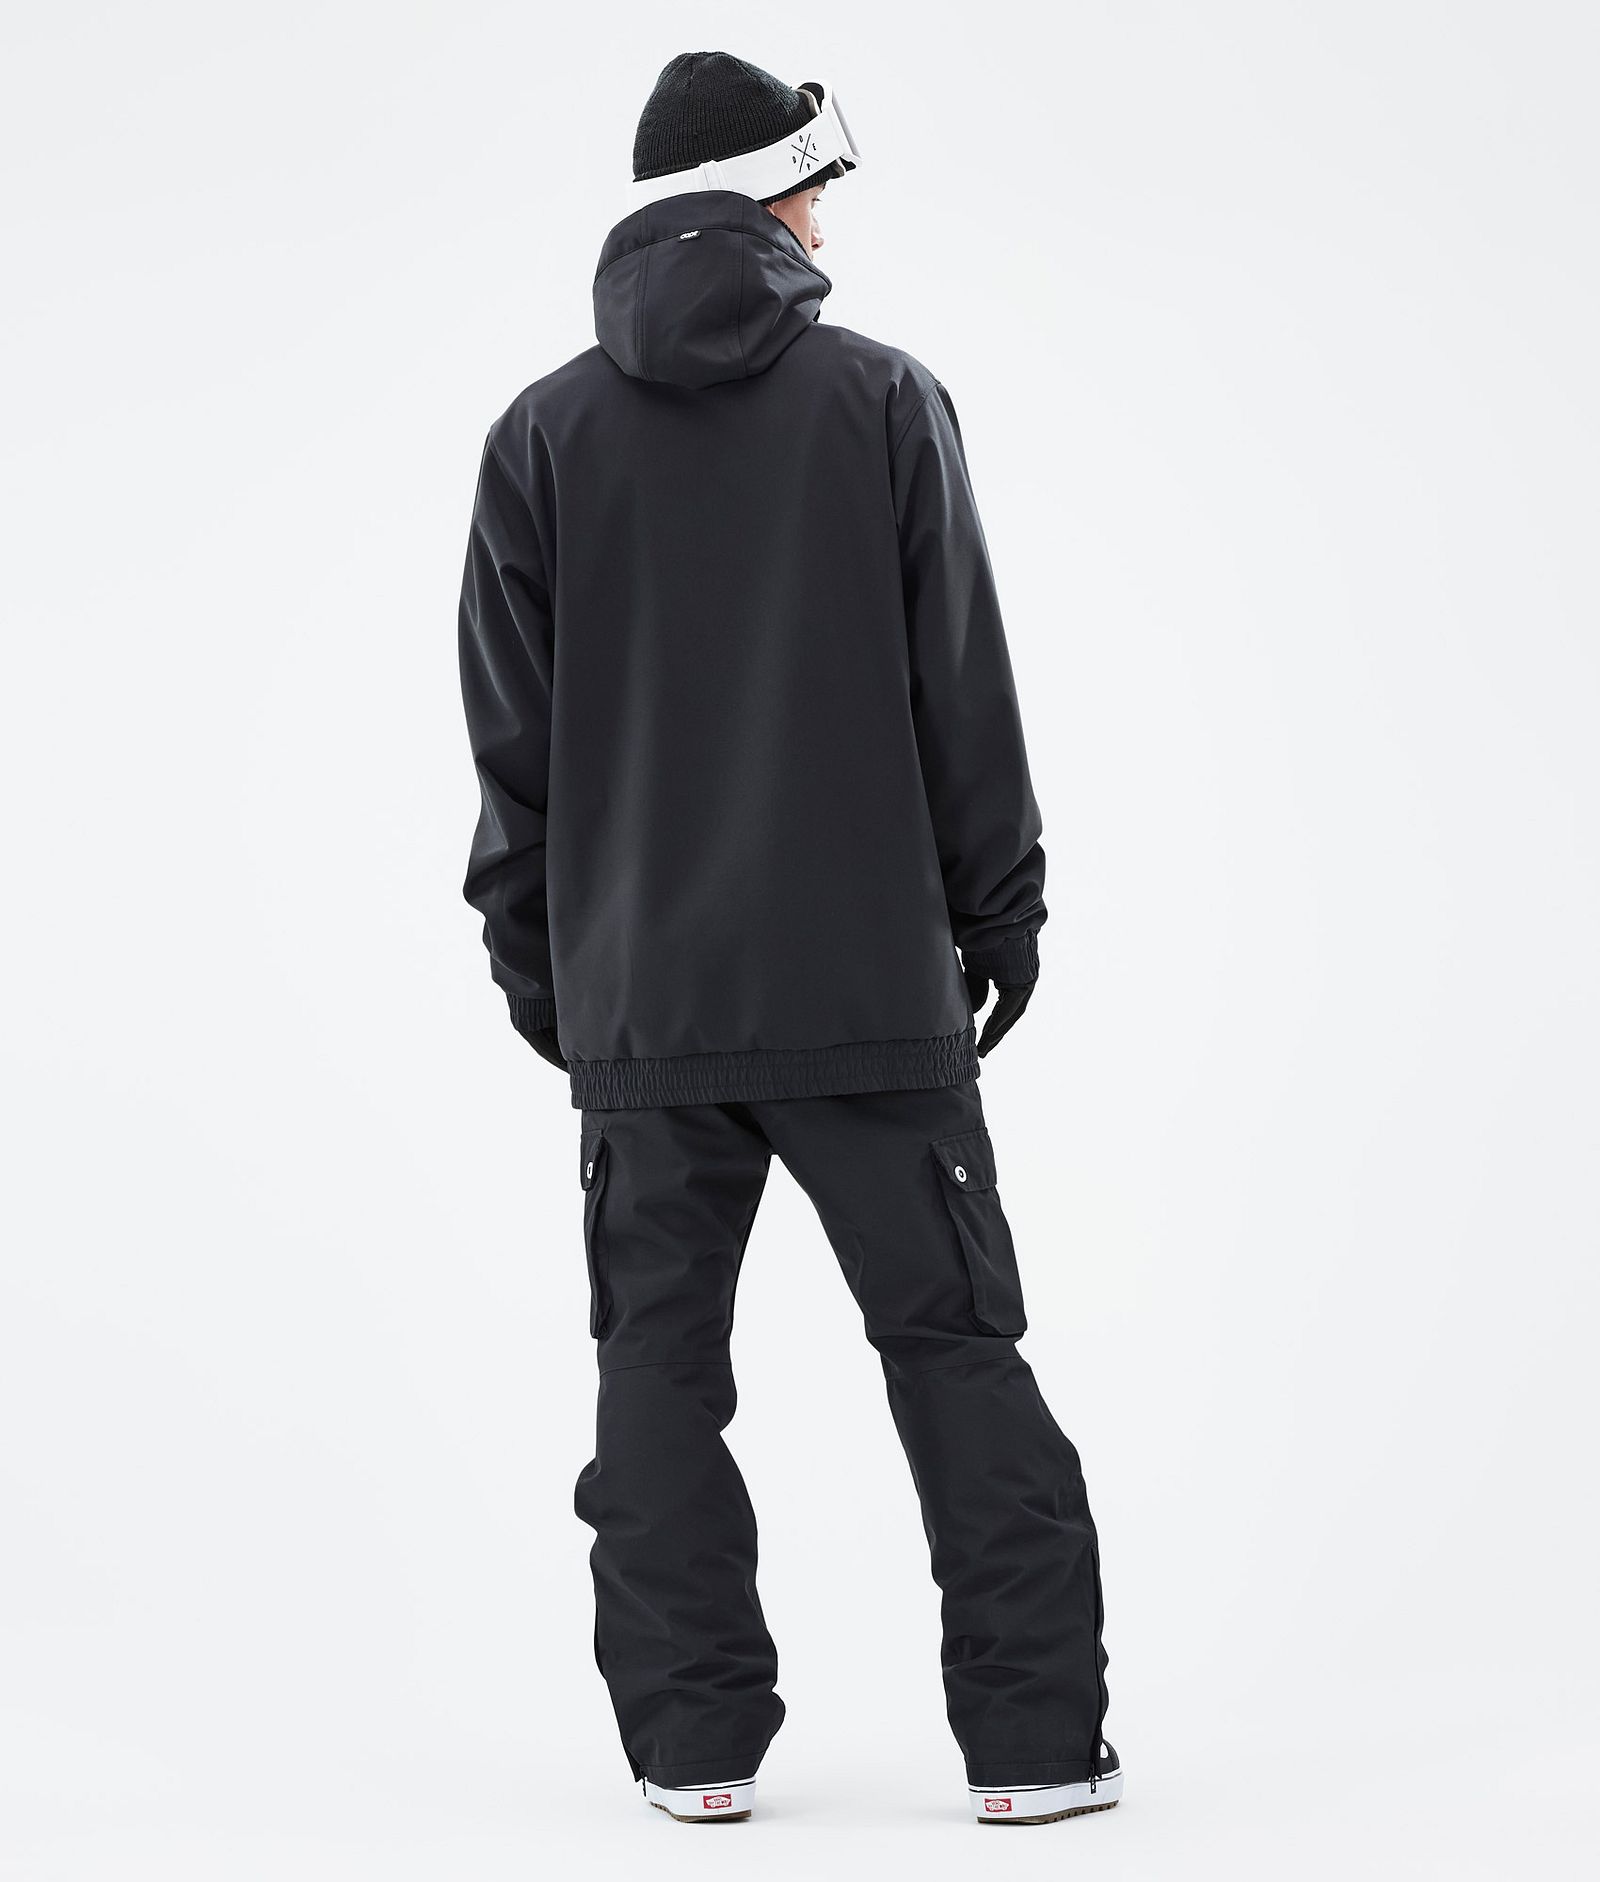 Yeti Snowboard Outfit Herren Black/Black